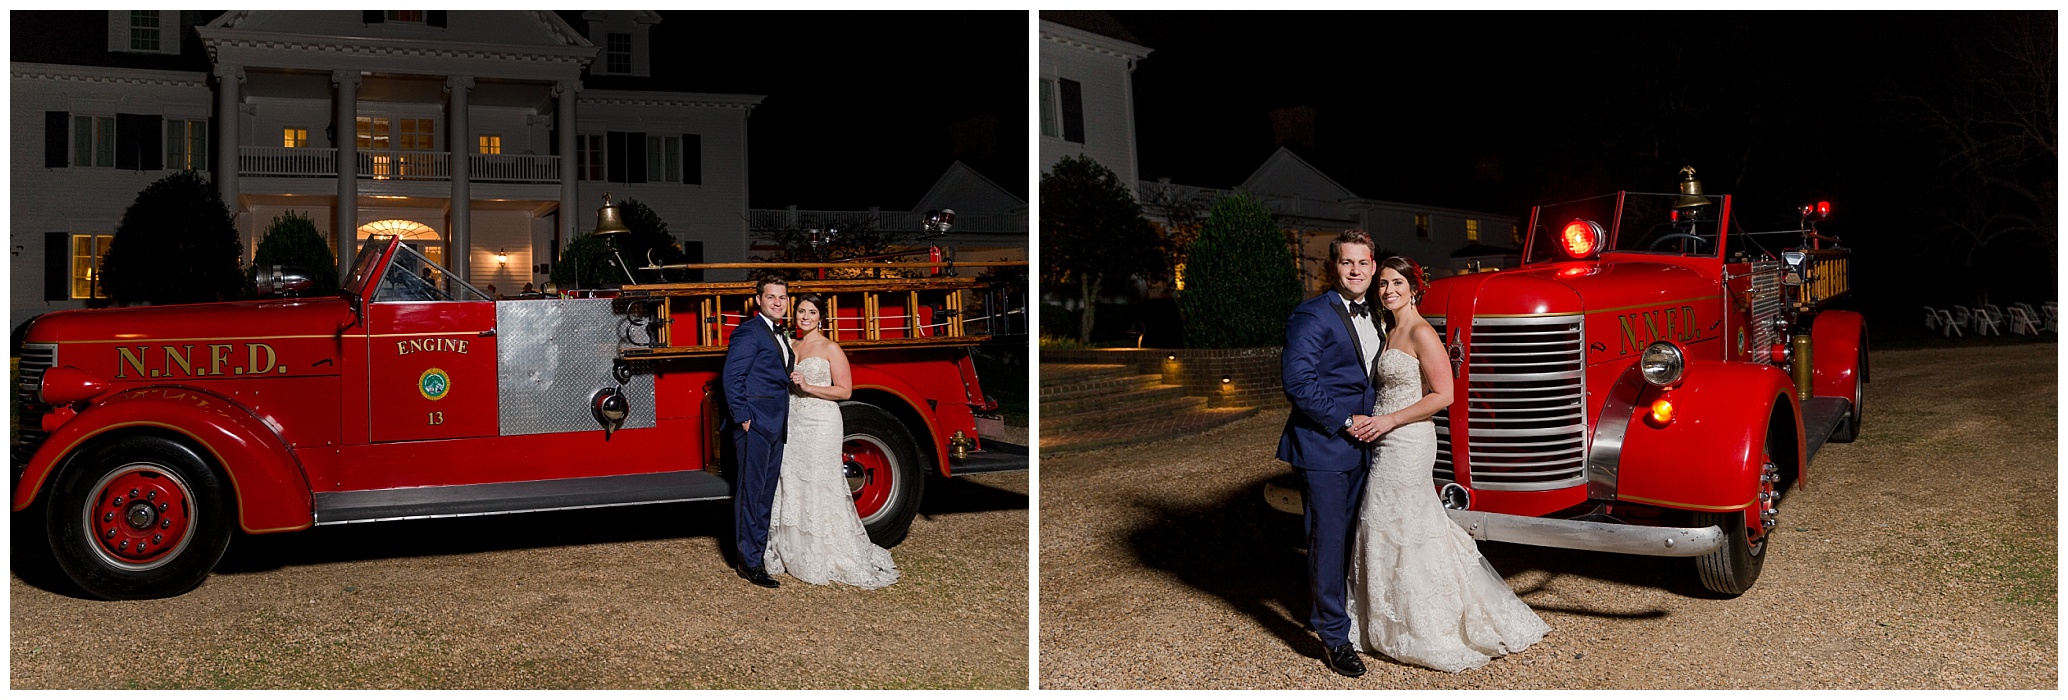 Vintage Fire Truck at Wedding